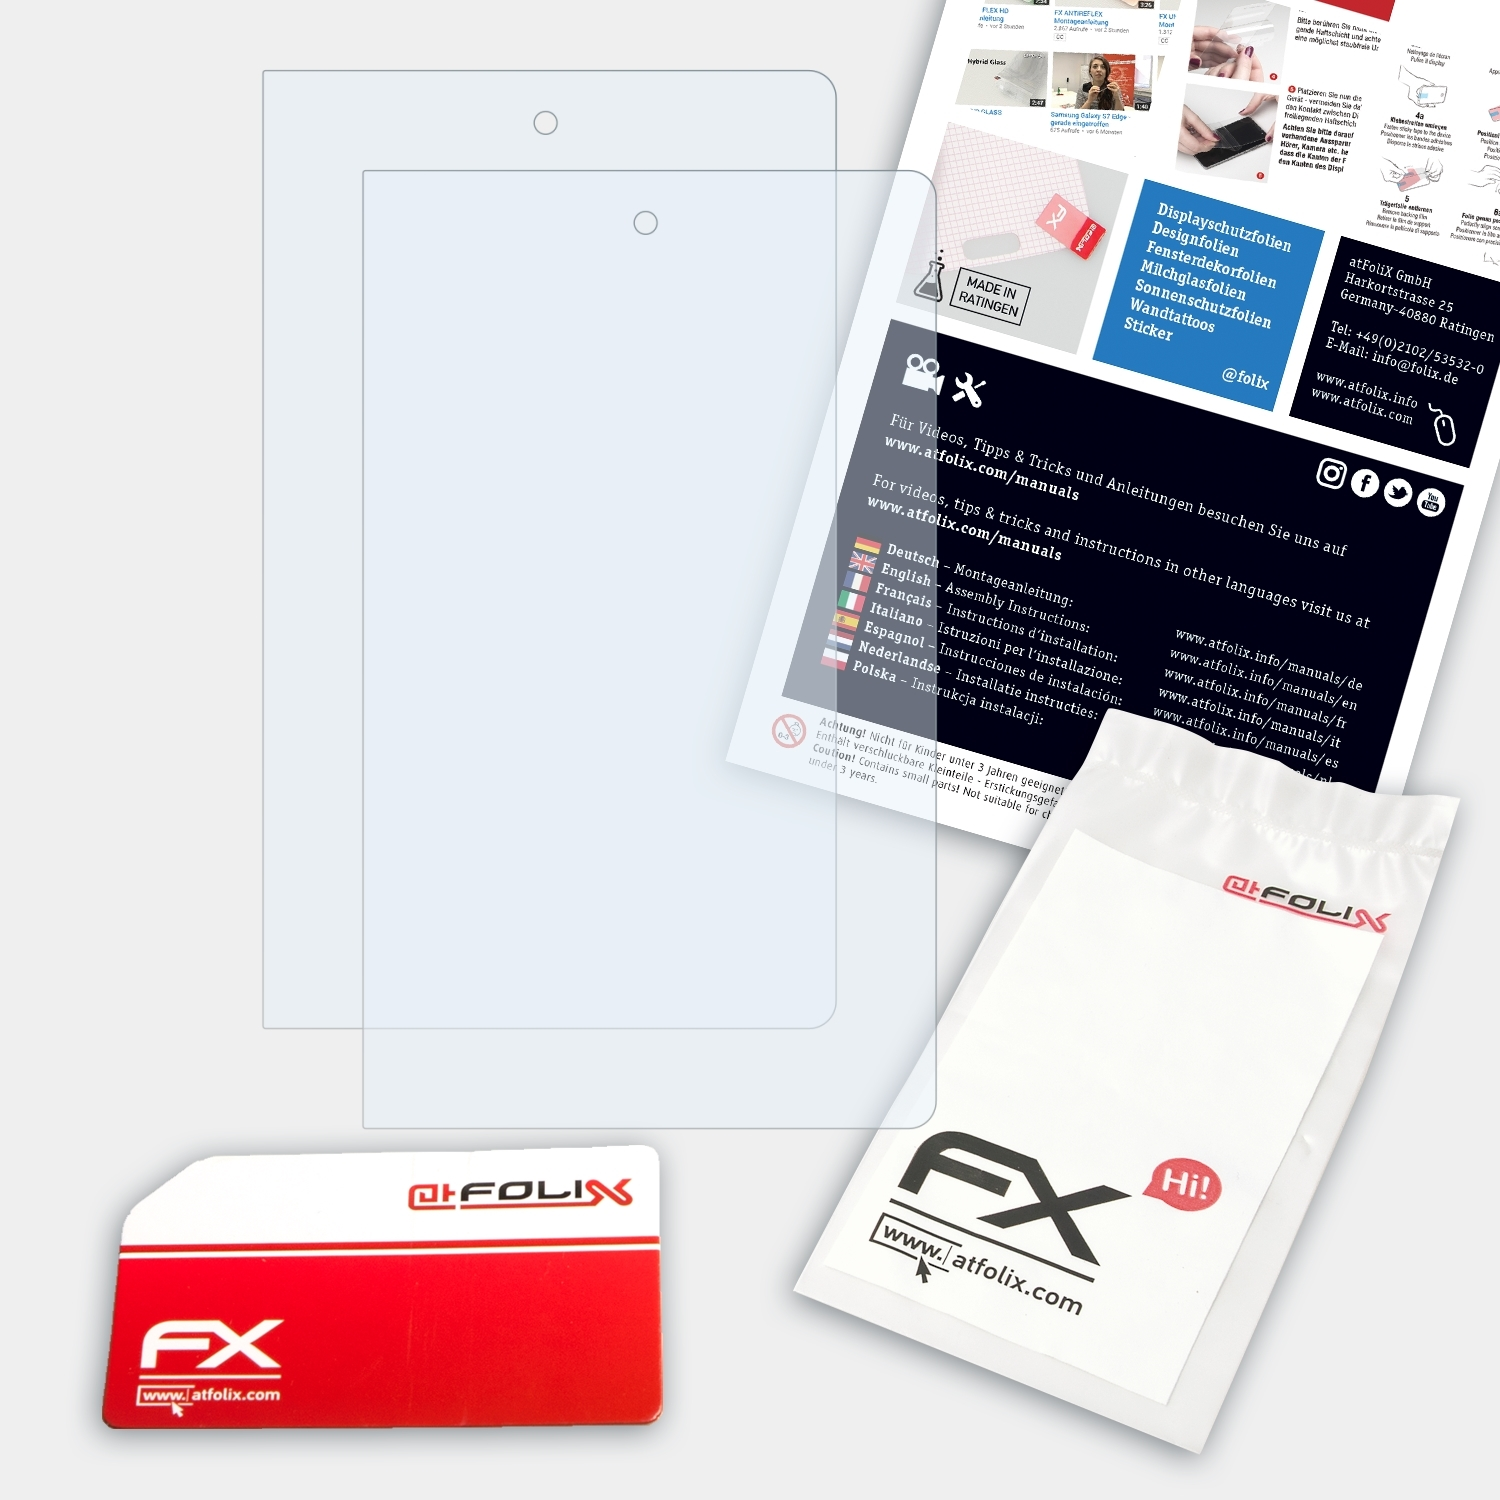 ATFOLIX 2x FX-Clear Yoga 8) Lenovo Displayschutz(für Tablet